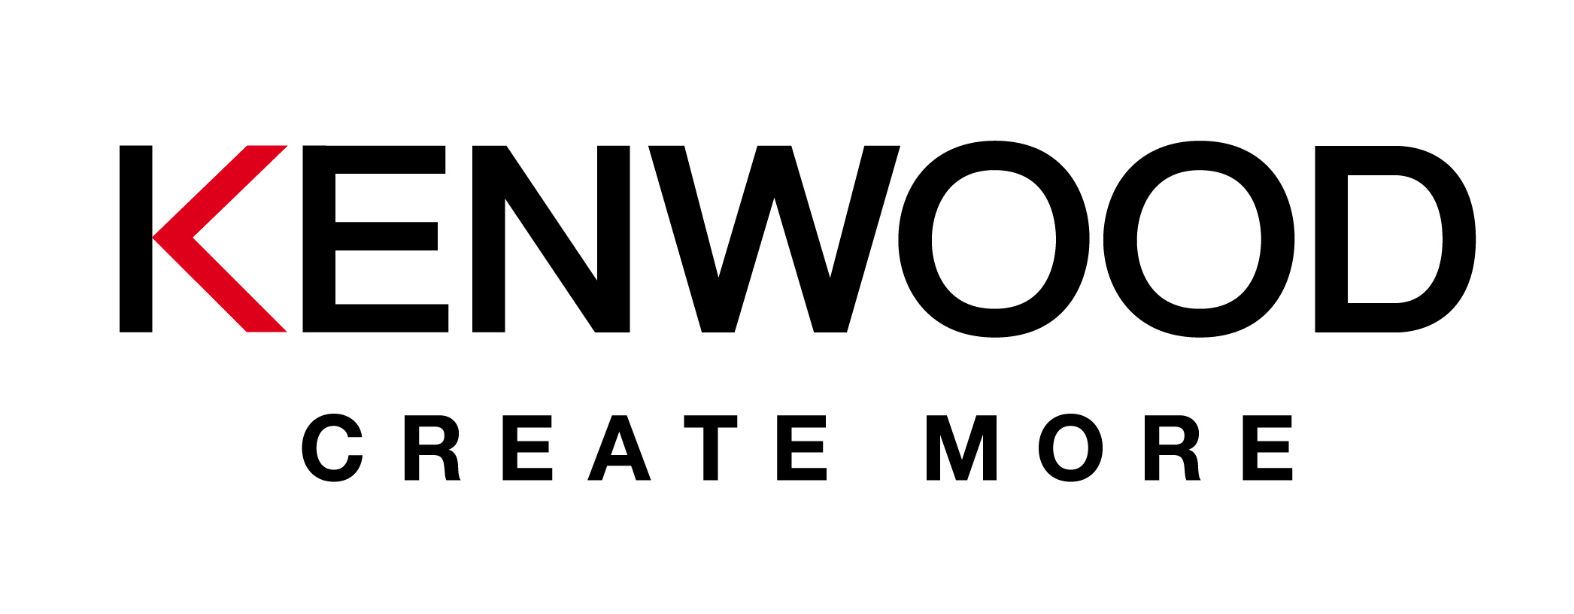 Kenwood-logo-